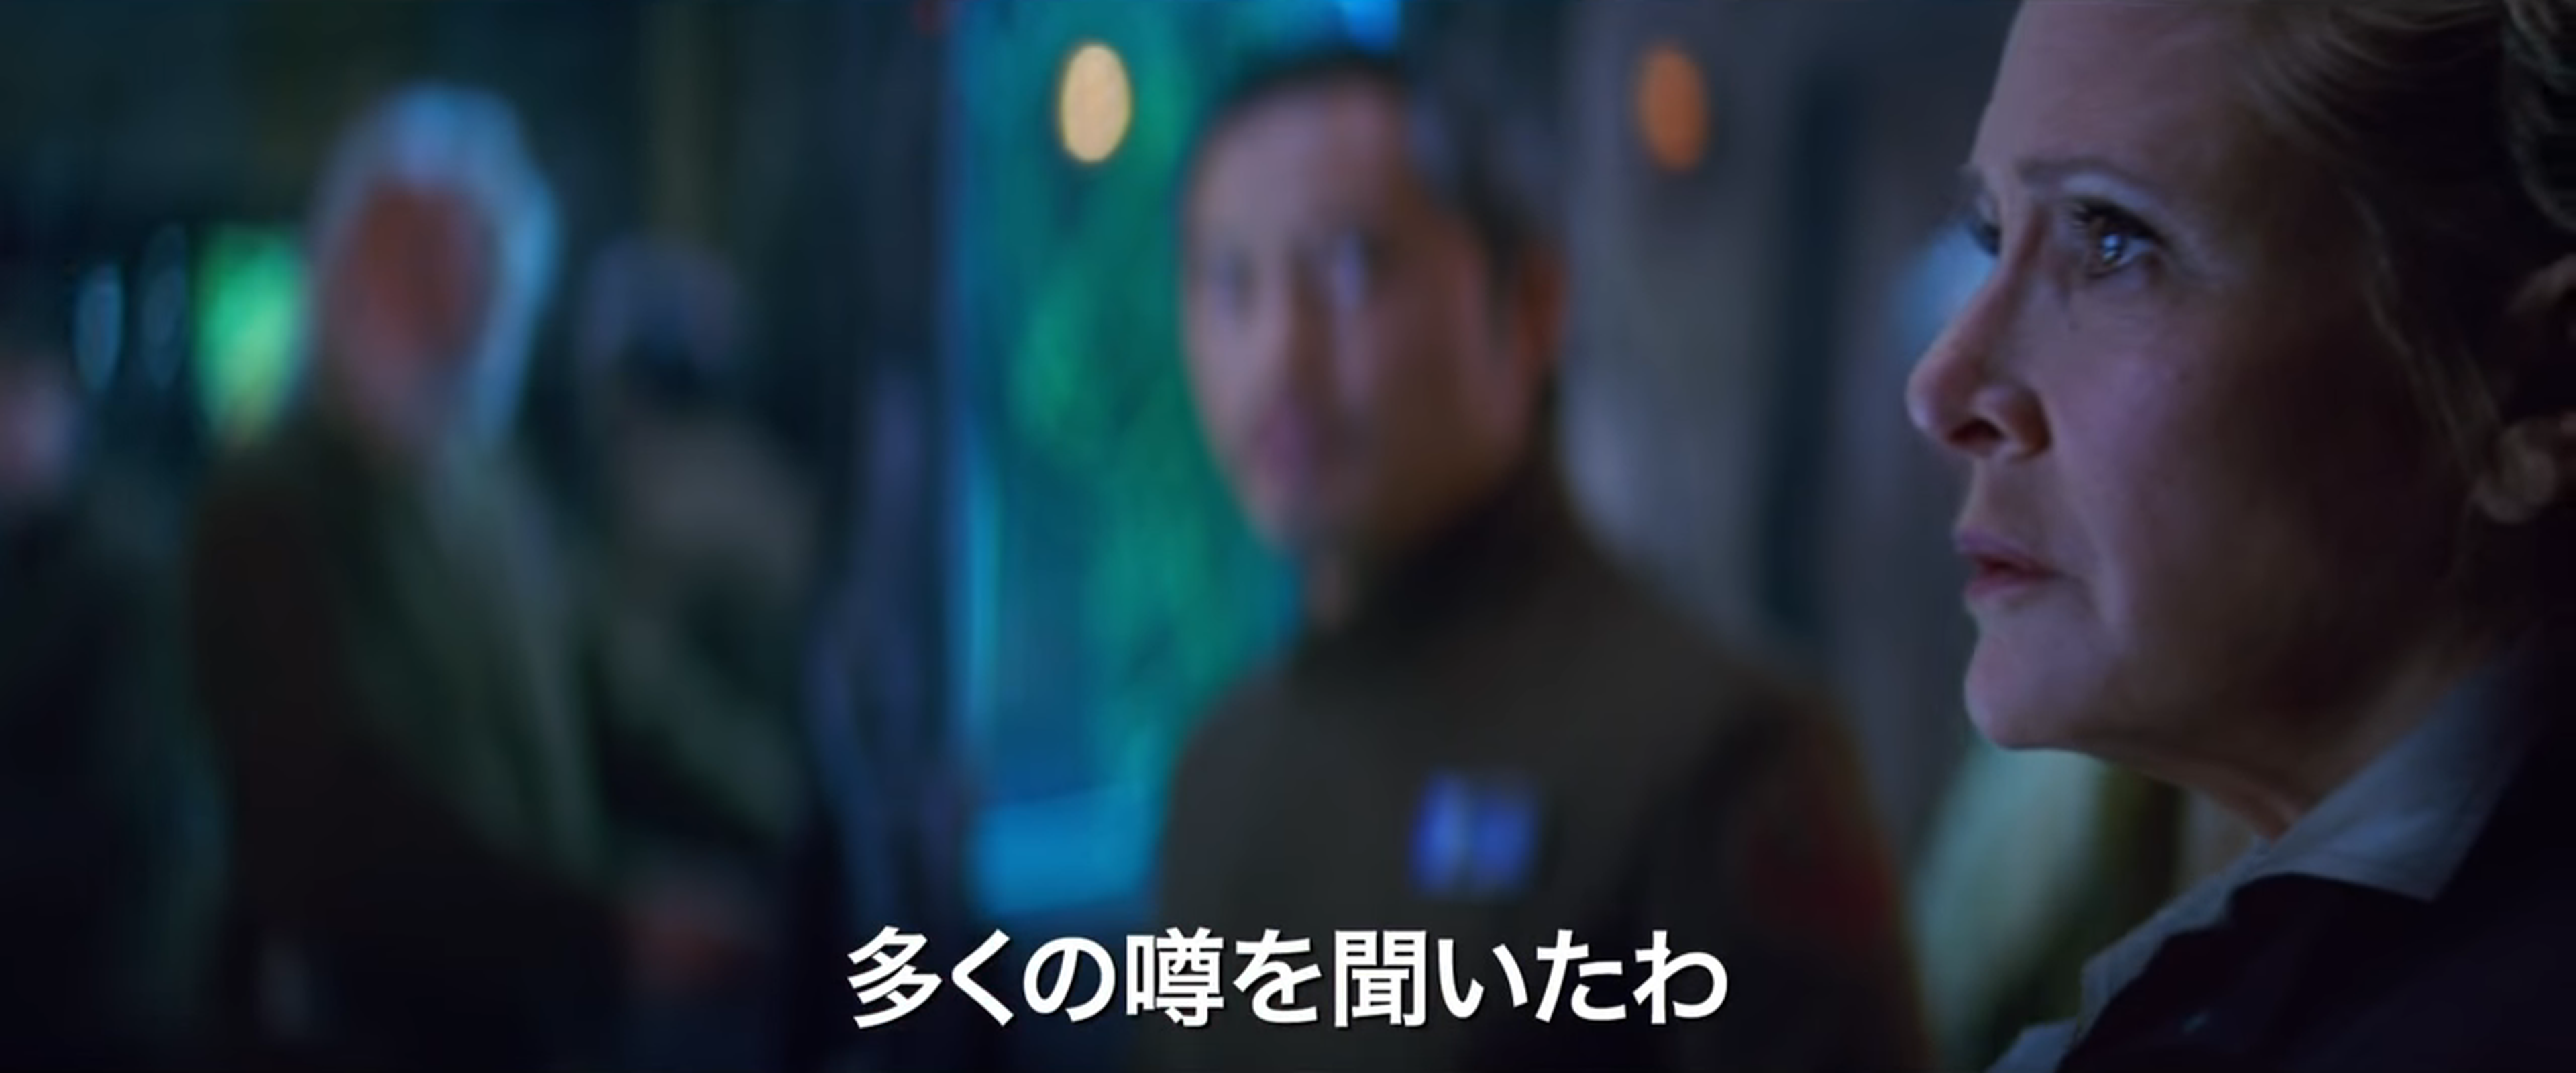 Star Wars Episodio VII: Claves del trailer japonés